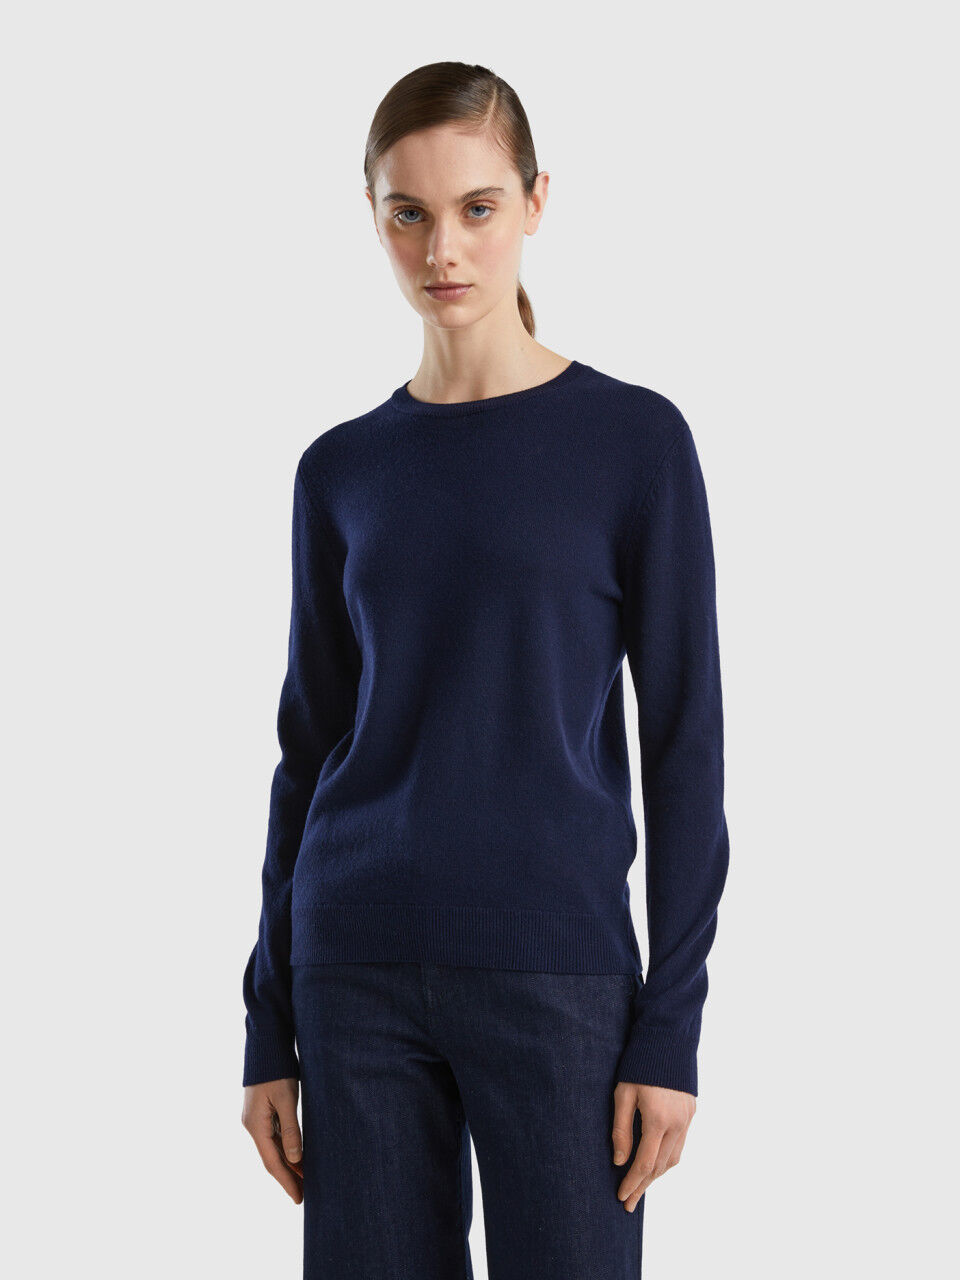 Dark blue crew neck sweater in Merino wool